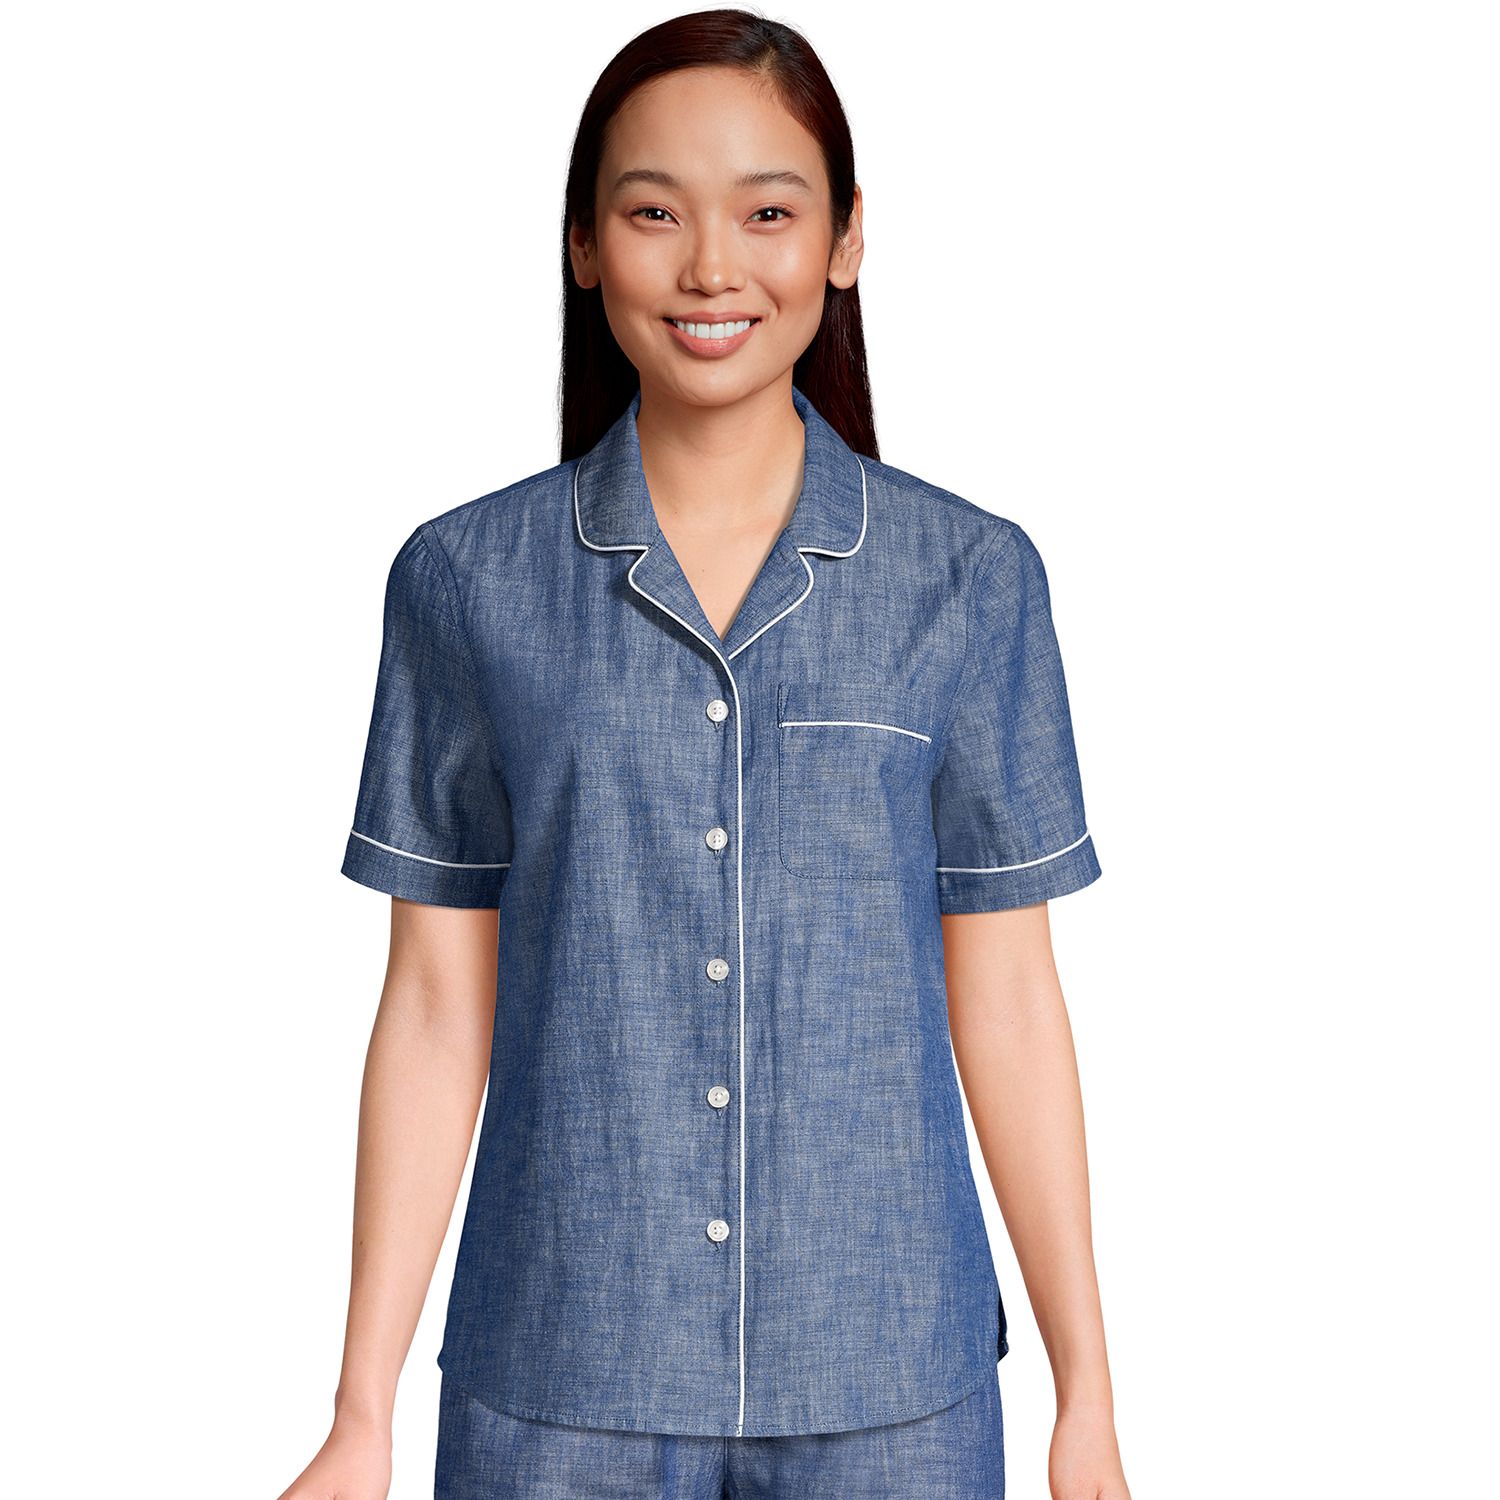 Image for Lands' End Women's Short Sleeve Pajama Shirt at Kohl's.